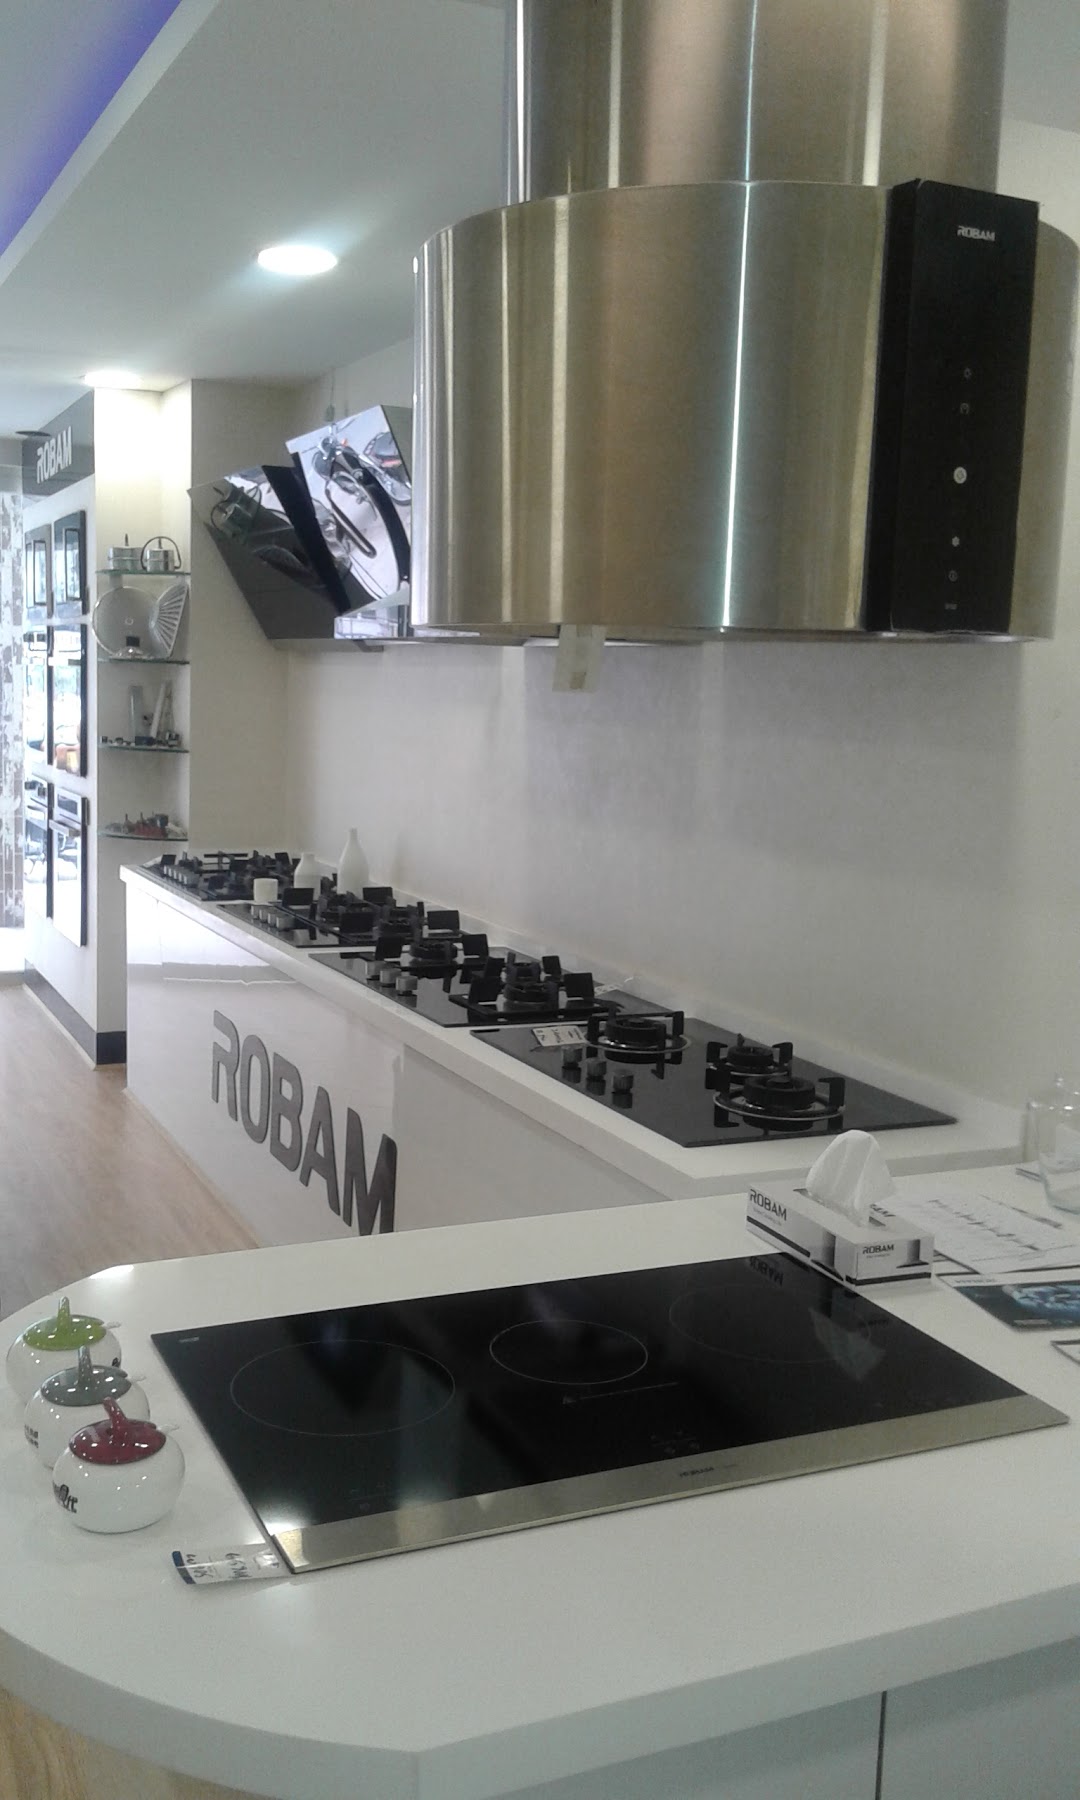 Robam Display center